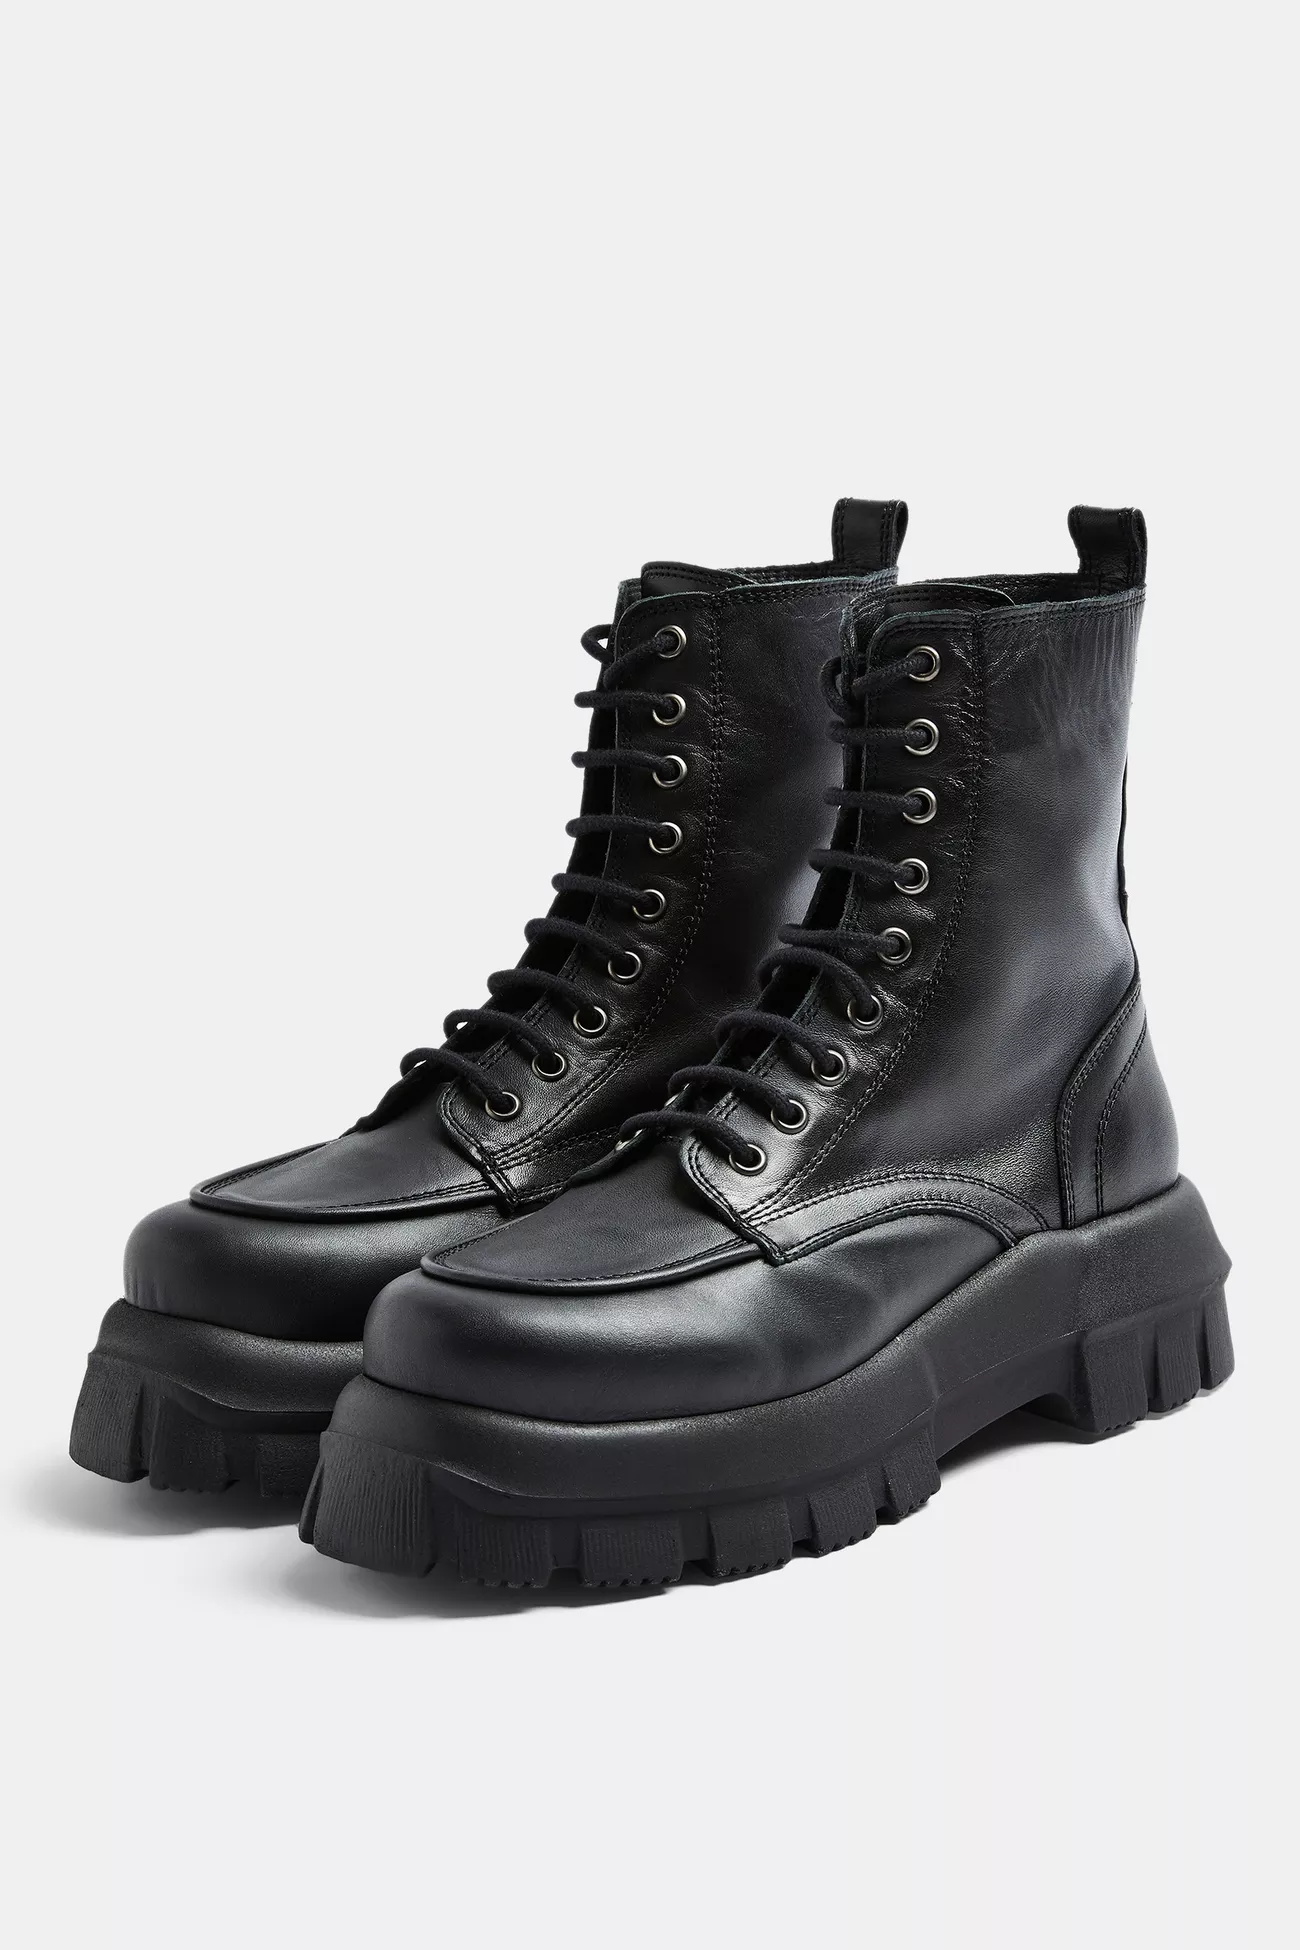 chic combat boots